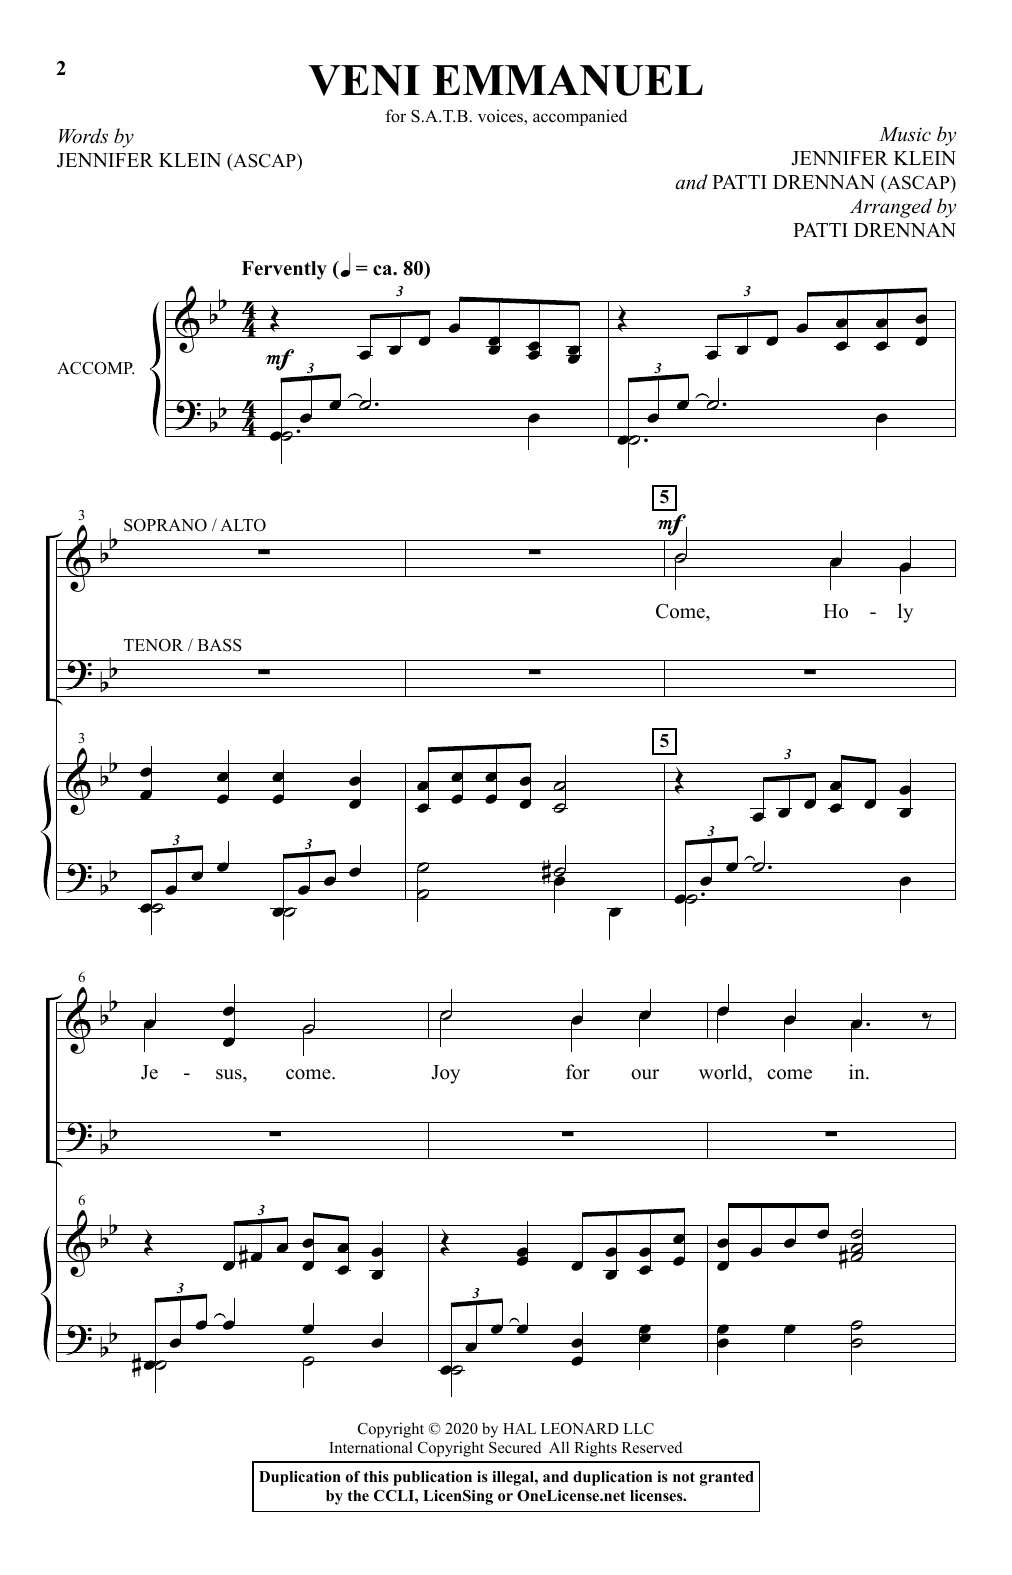 Jennifer Klein Veni Emmanuel (arr. Patti Drennan) Sheet Music Notes & Chords for SATB Choir - Download or Print PDF